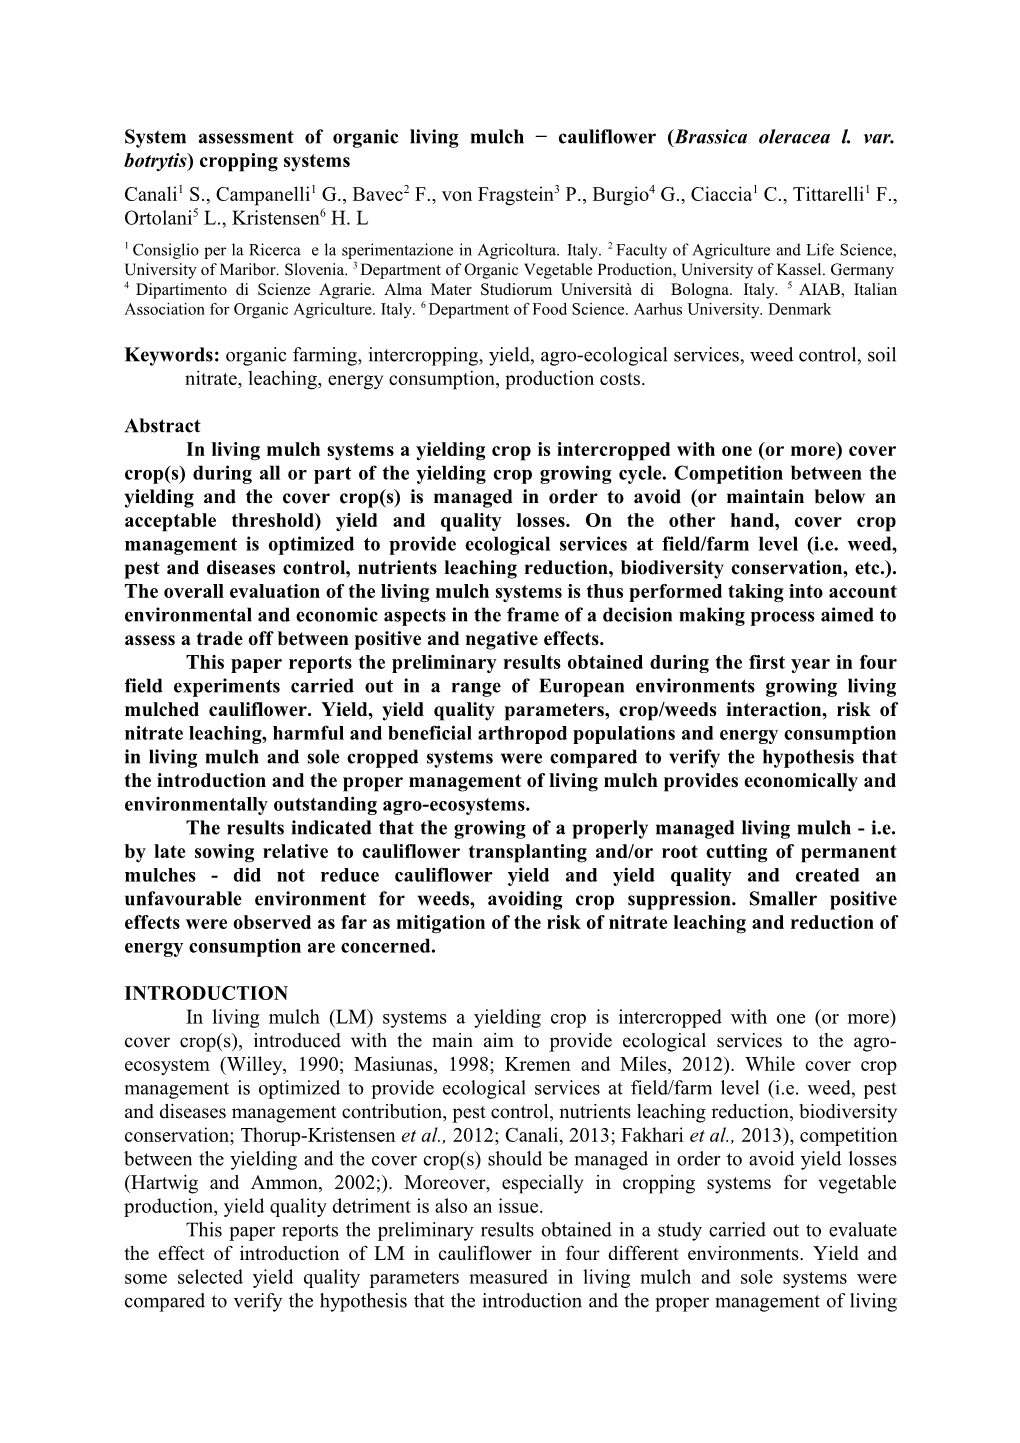 System Assessment of Organic Living Mulch Cauliflower (Brassica Oleracea L. Var. Botrytis)